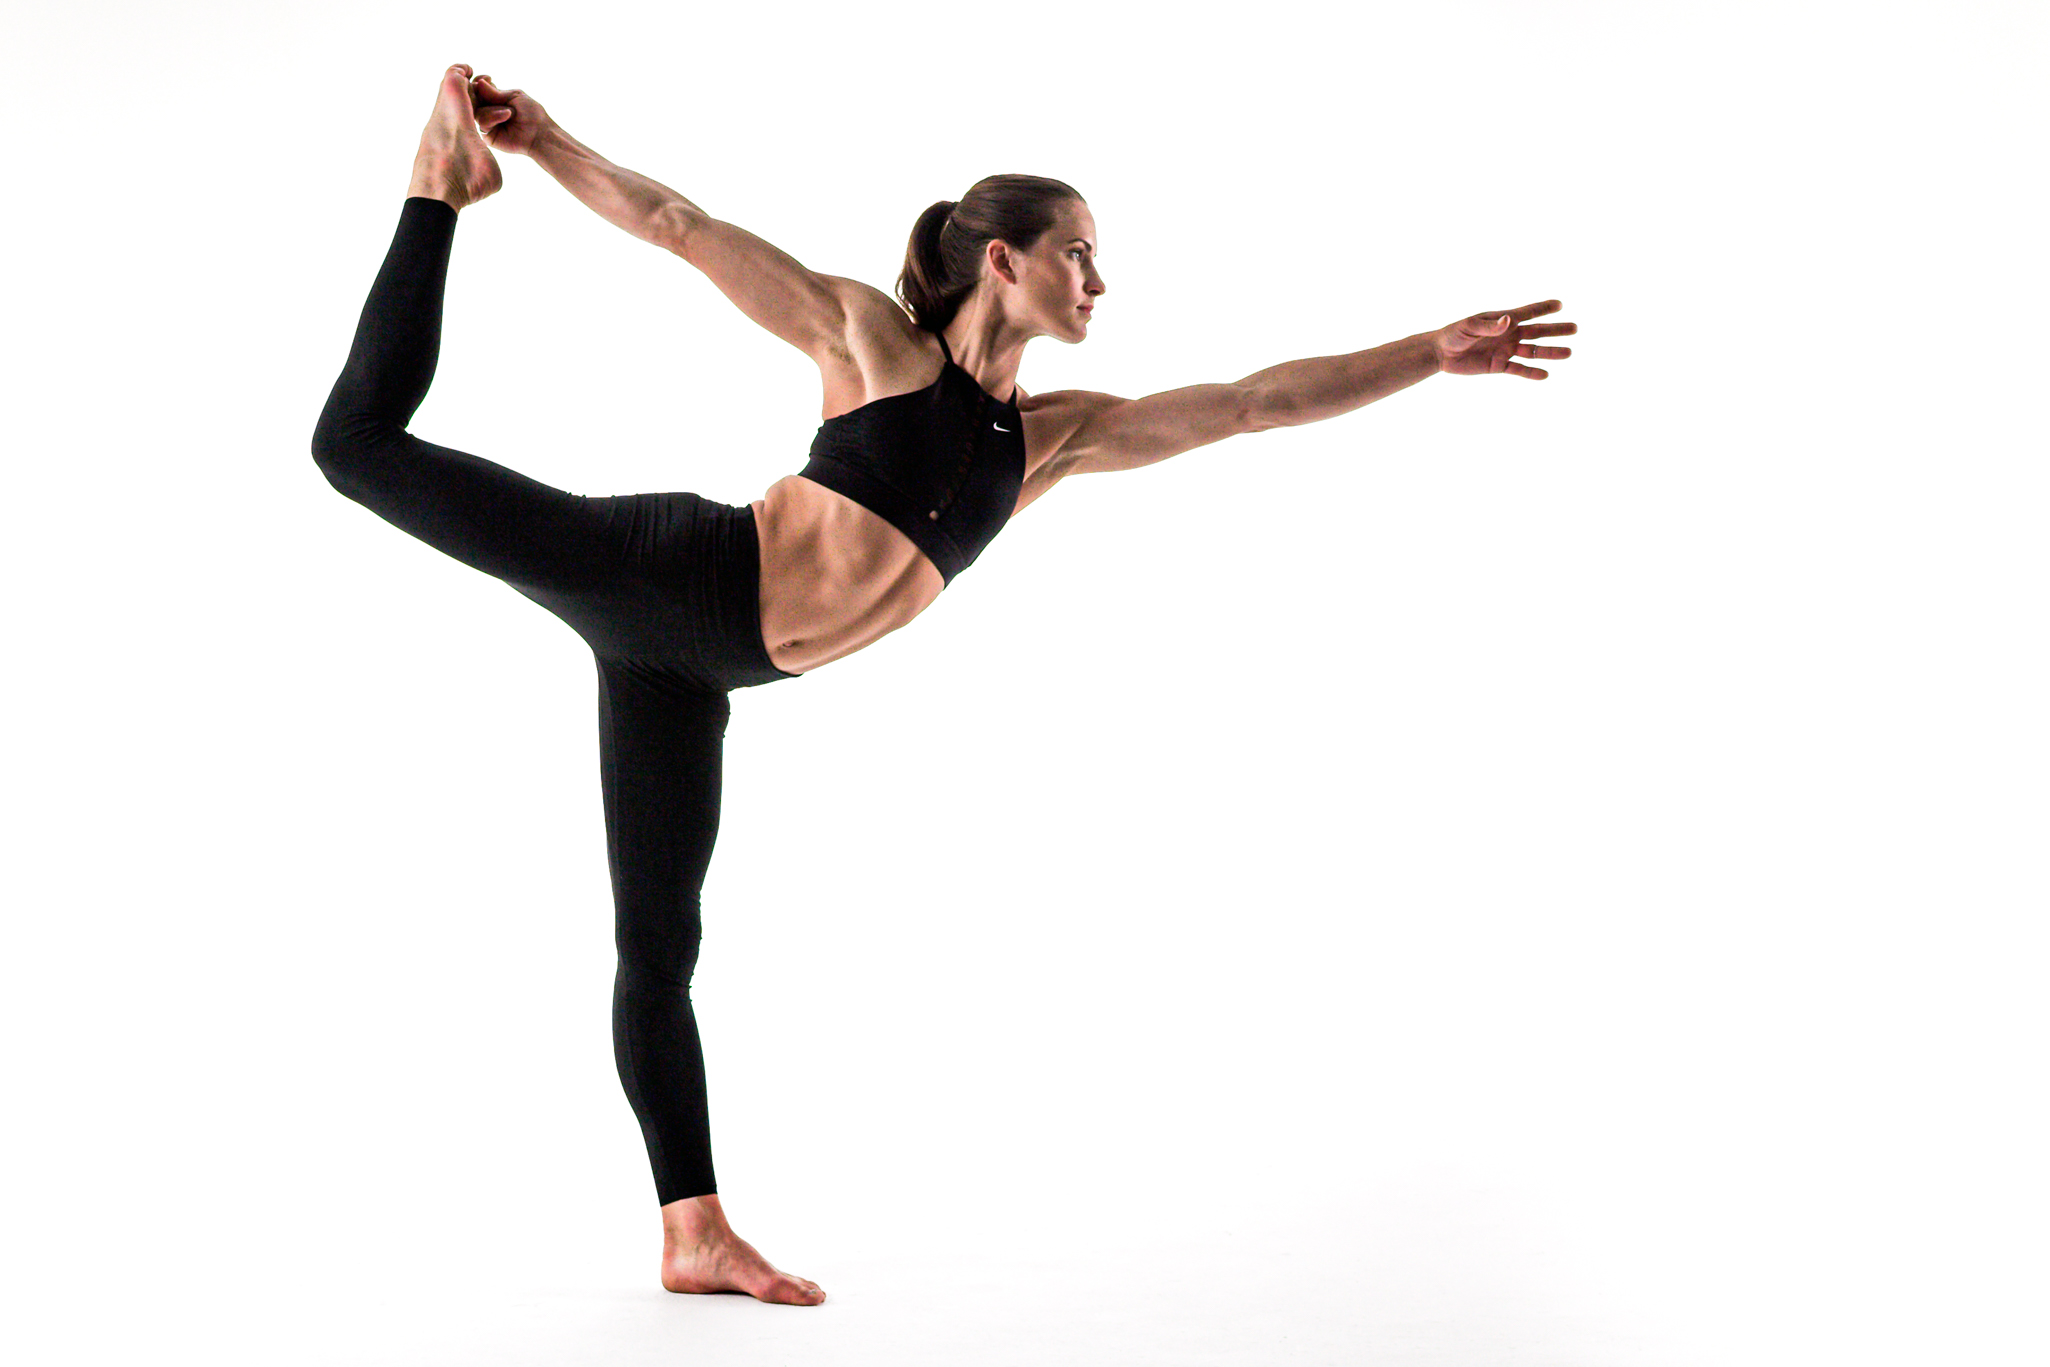 Nike yoga video featuring Lisa Chulich 